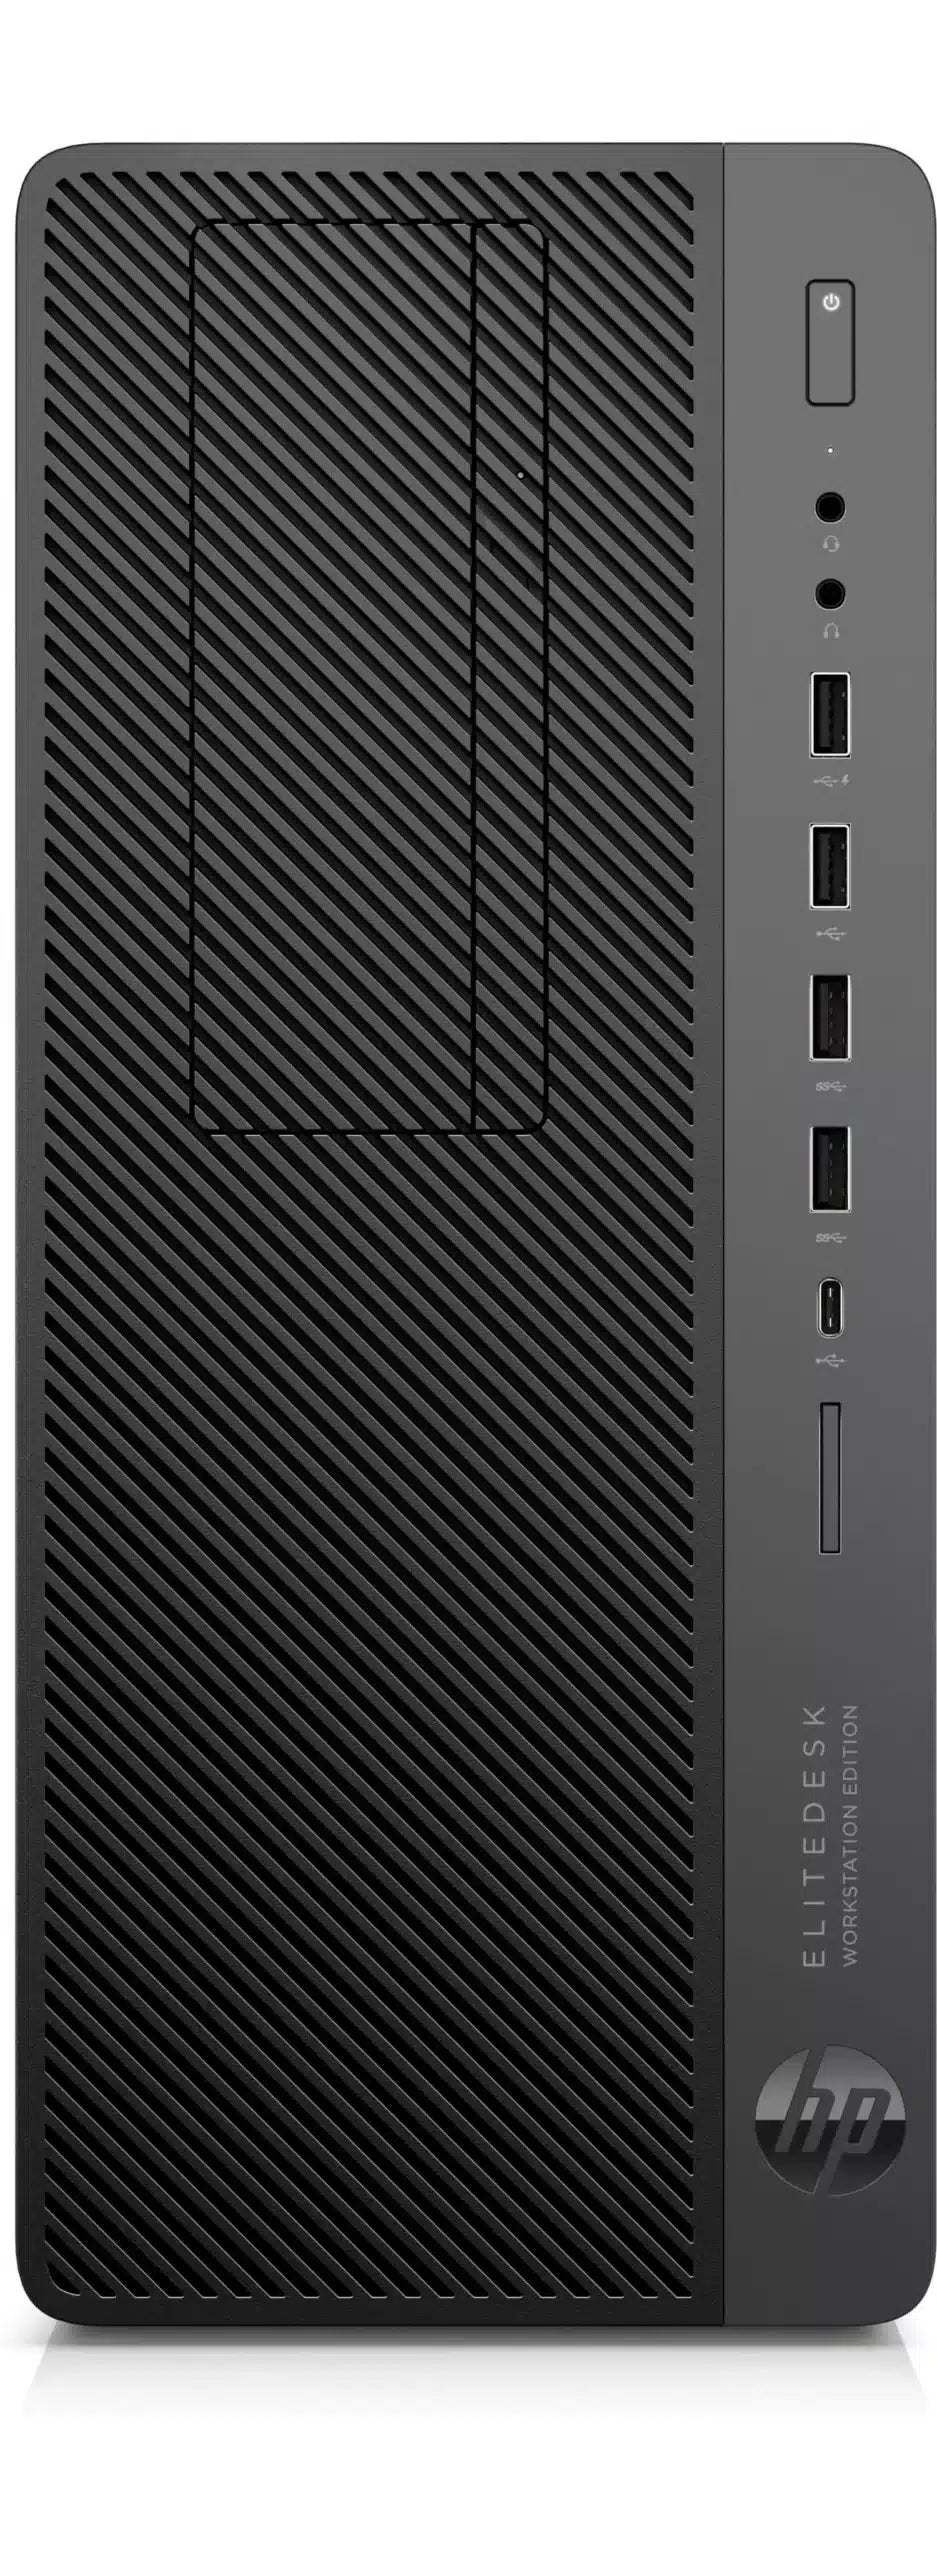 HP EliteDesk 800 G4 Workstation Edition